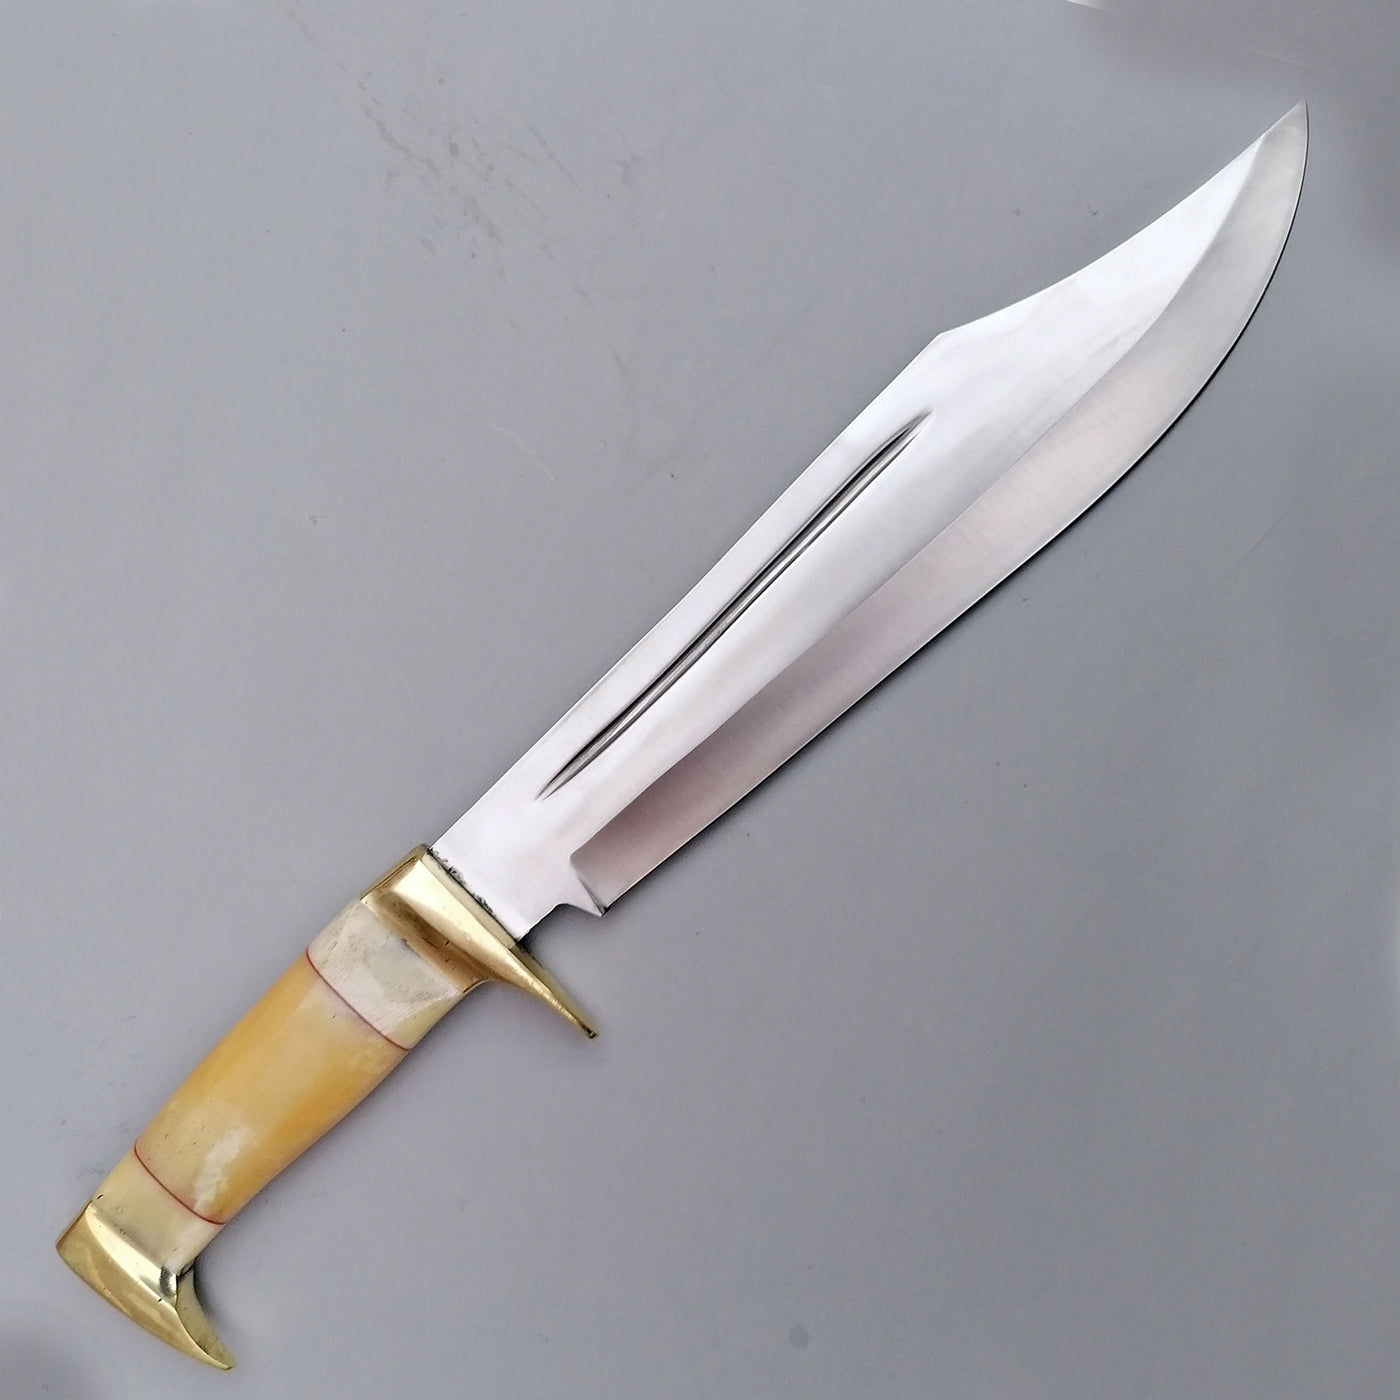 bowie knife